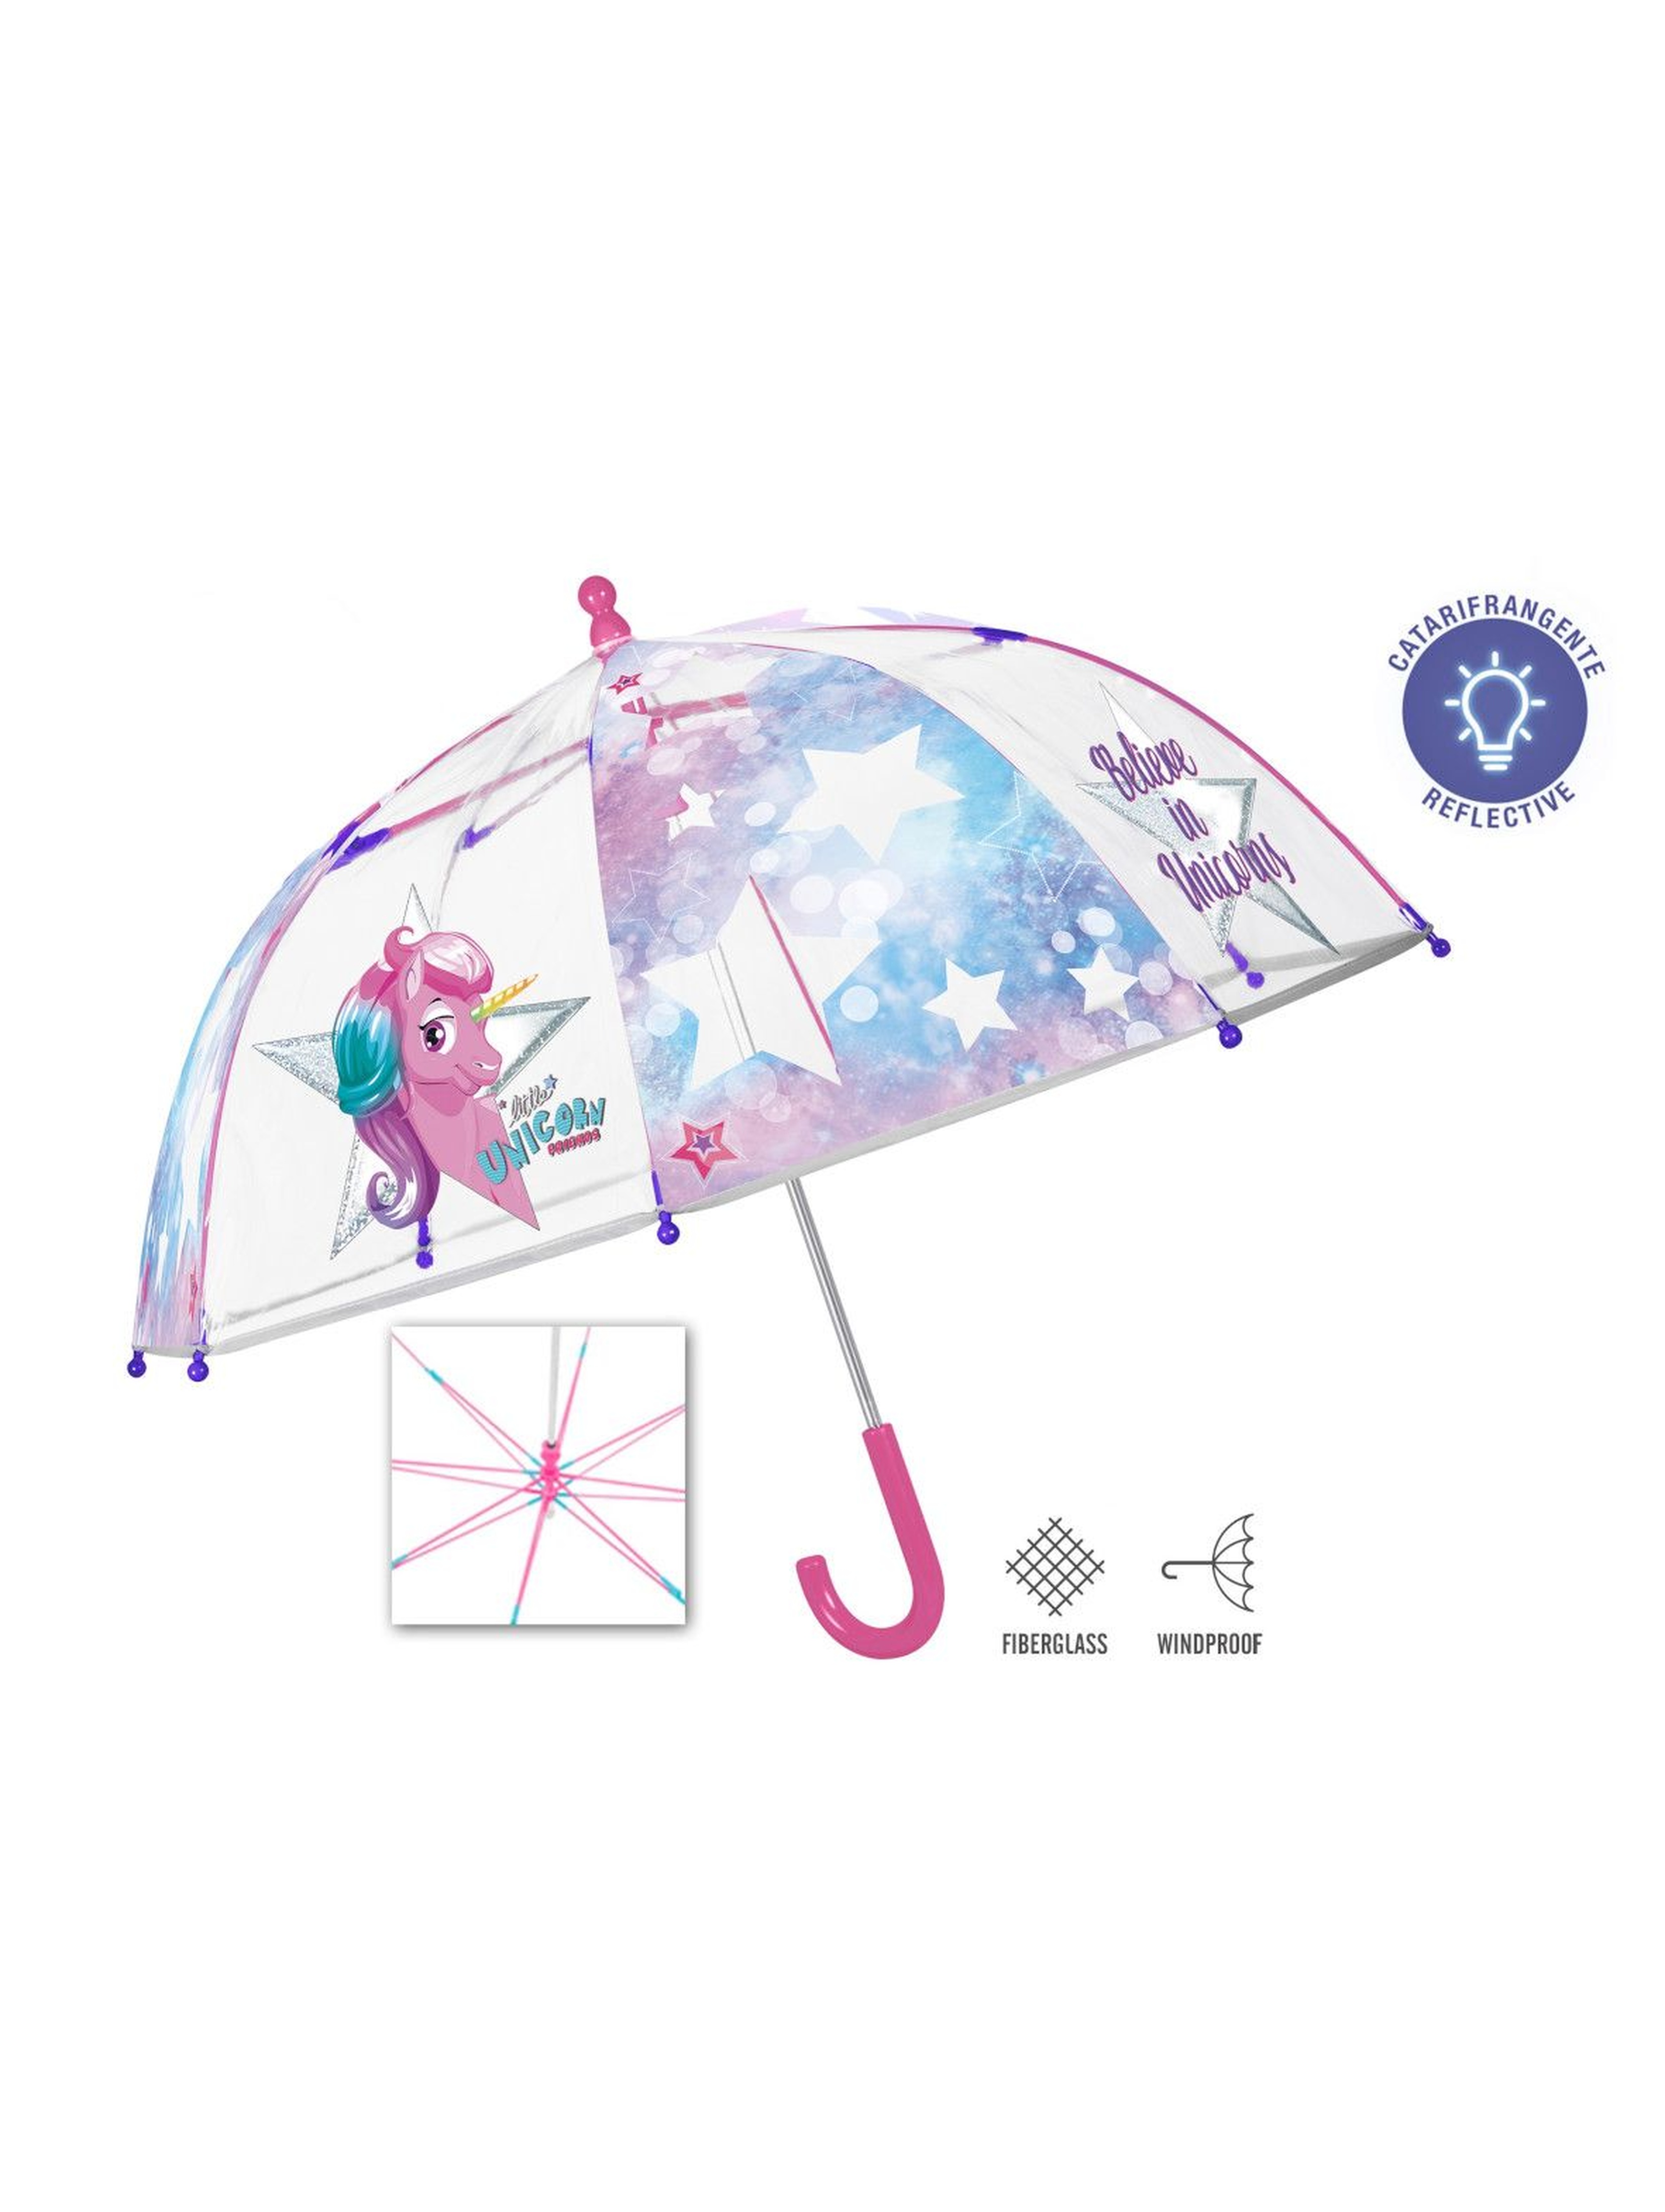 Transparentna parasolka z jednorożcem